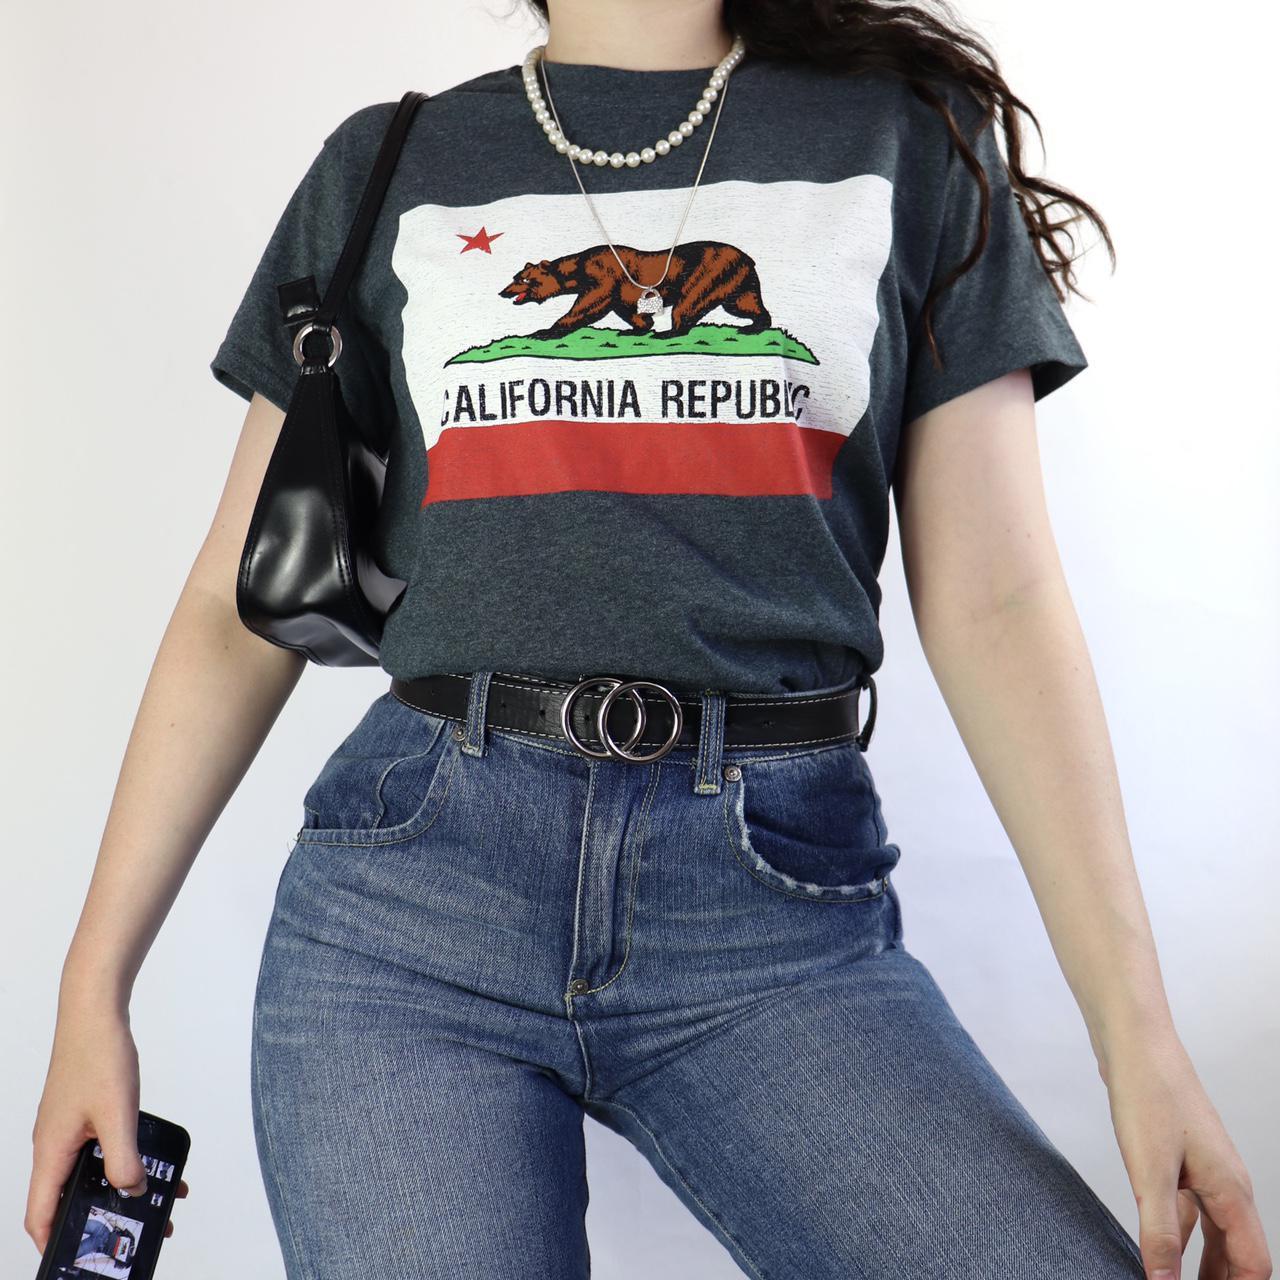 Product Image 1 - California Republic grey t-shirt 
In